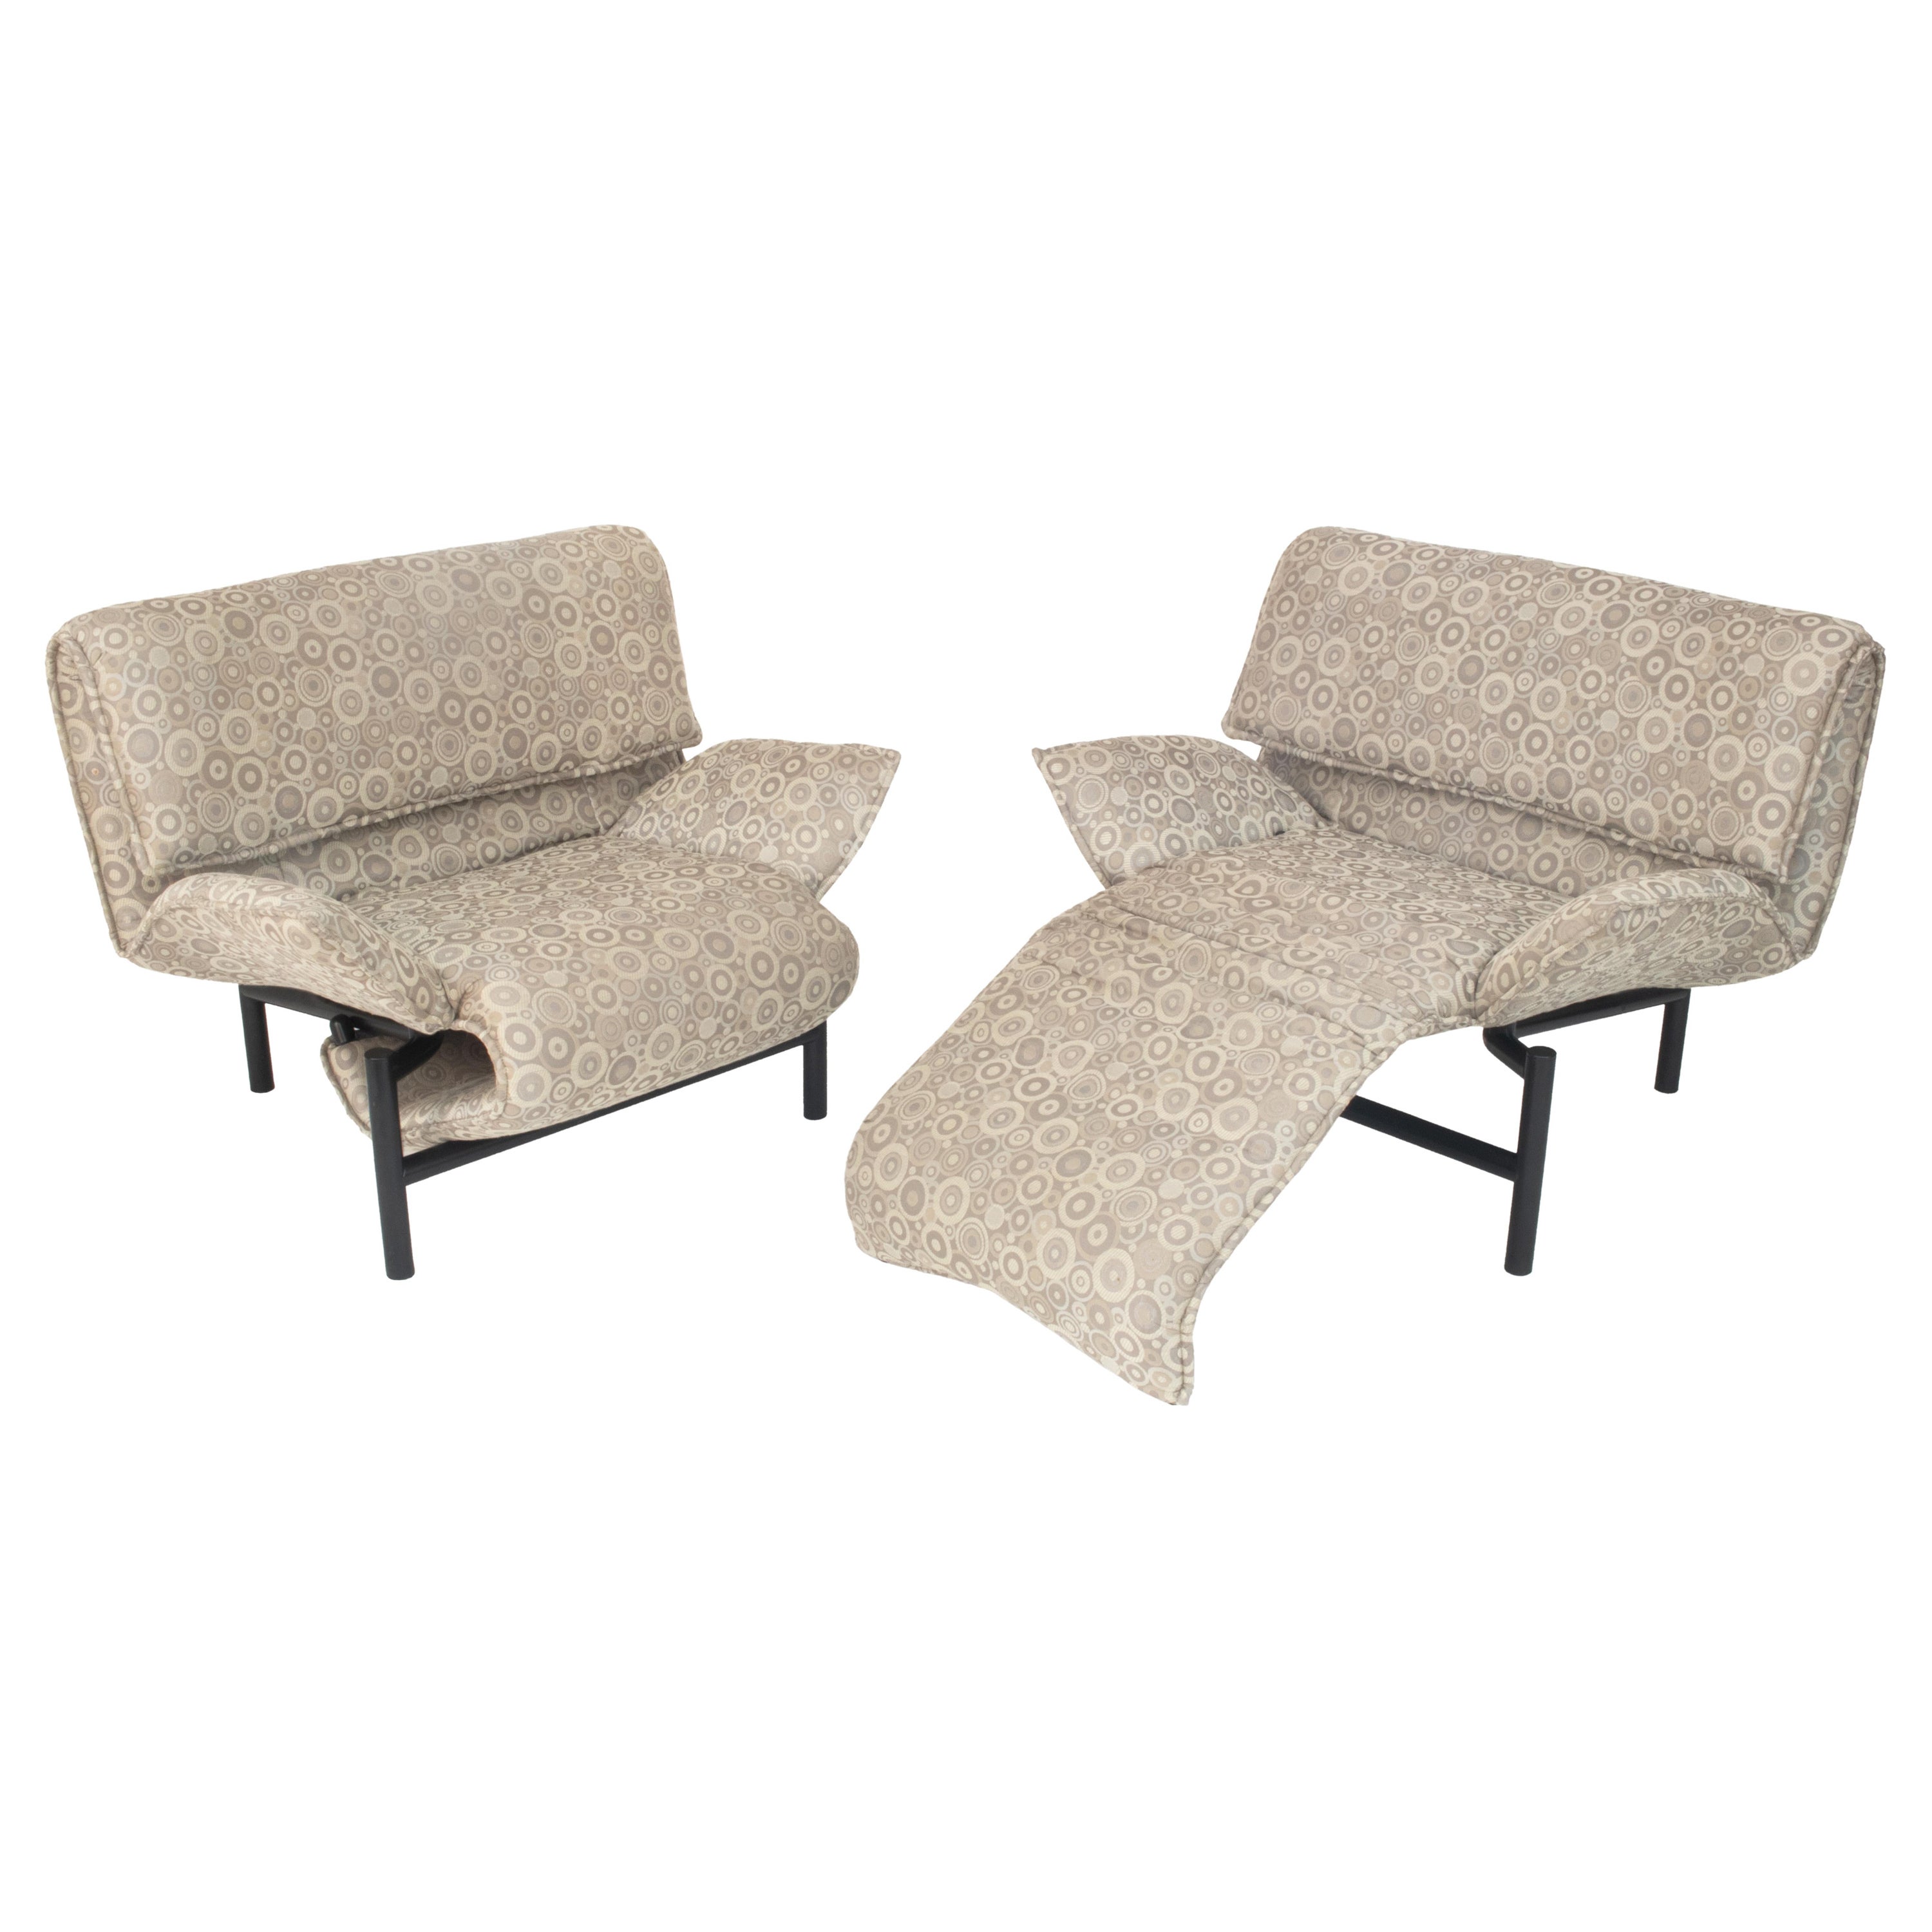 Pair of Cassina "Veranda" Lounge Chairs by Vico Magistretti